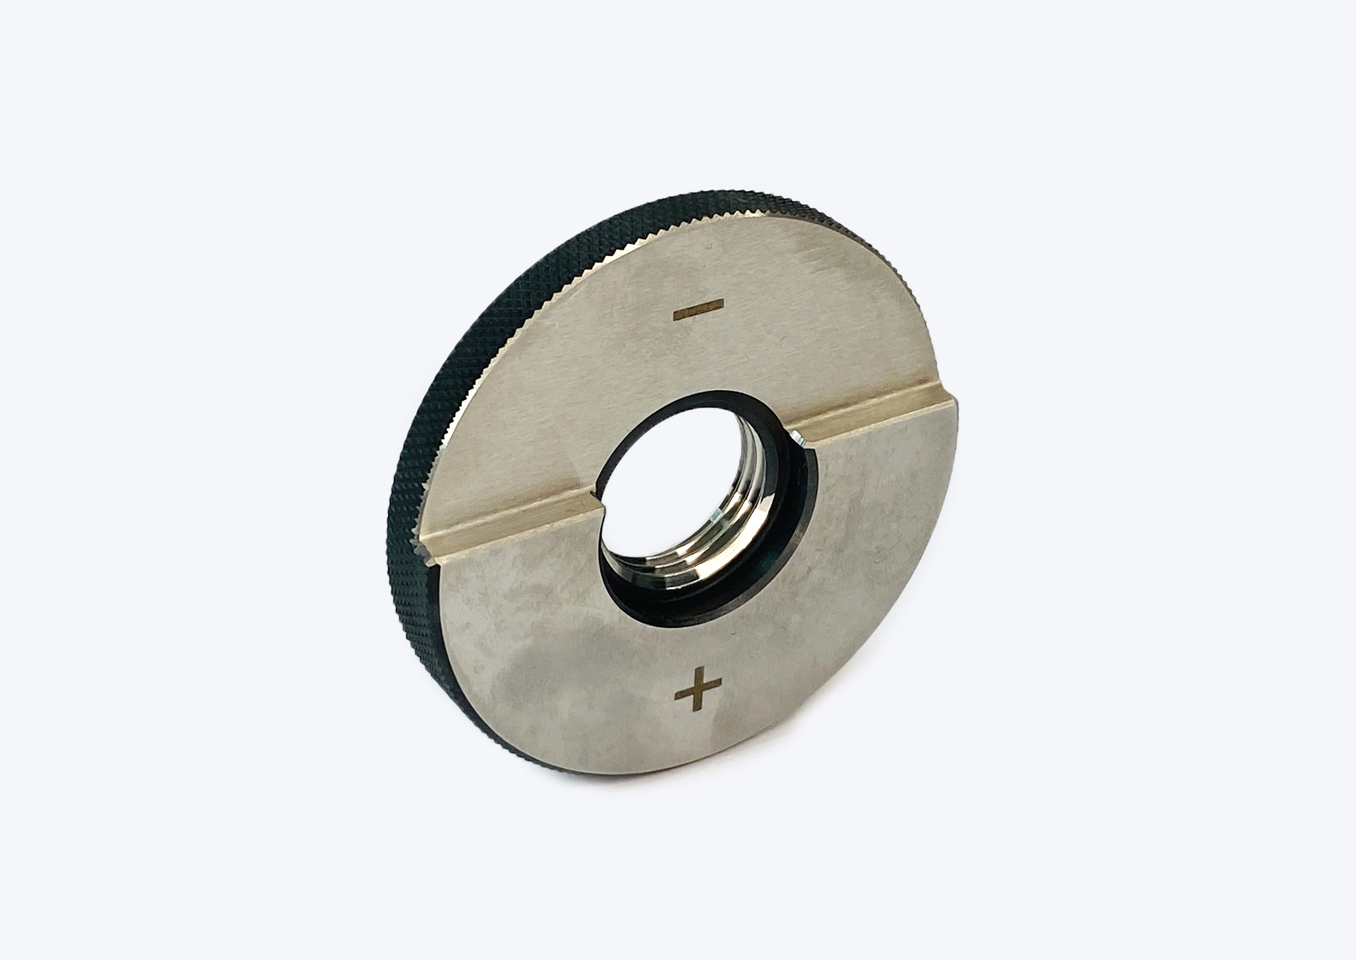 ISO 7 No.3 screw thread ring gauge